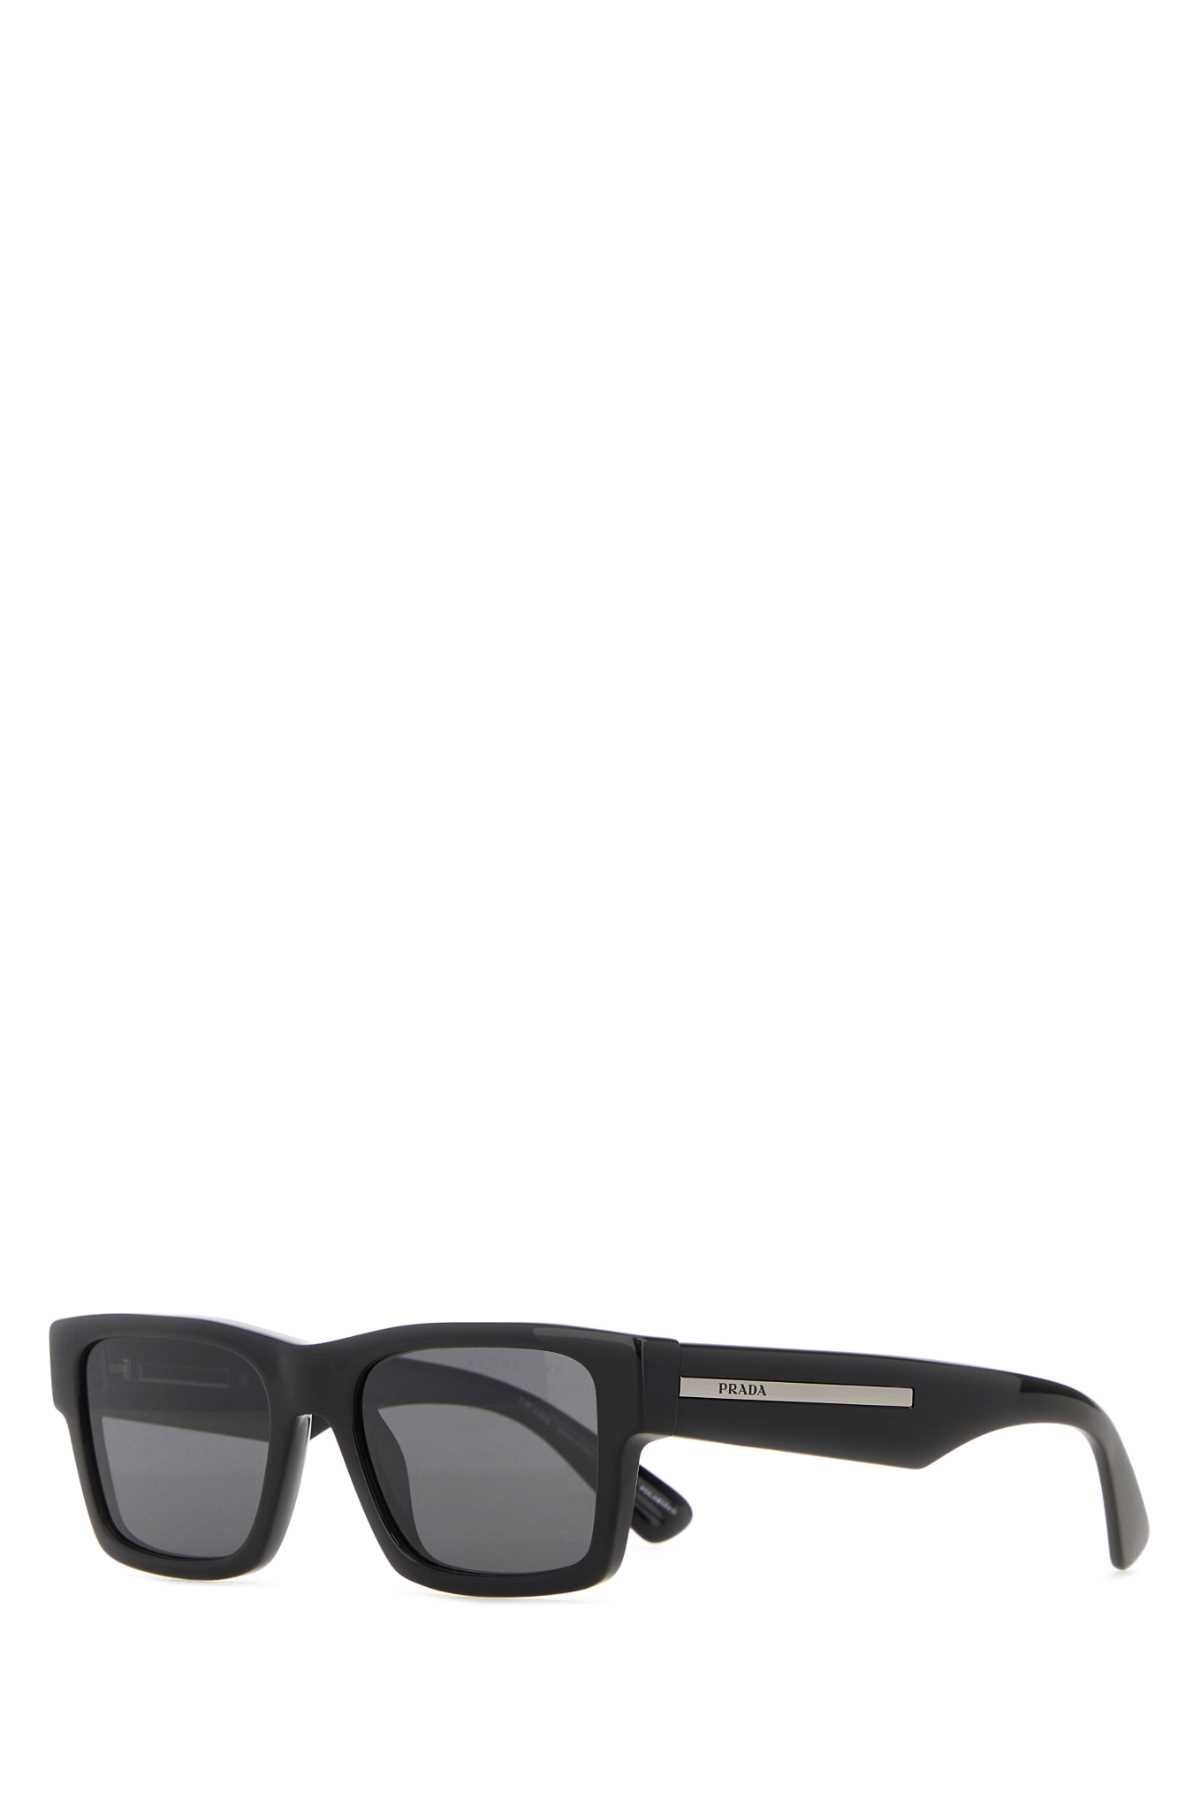 Shop Prada Black Acetate Sunglasses In Lensesardesia